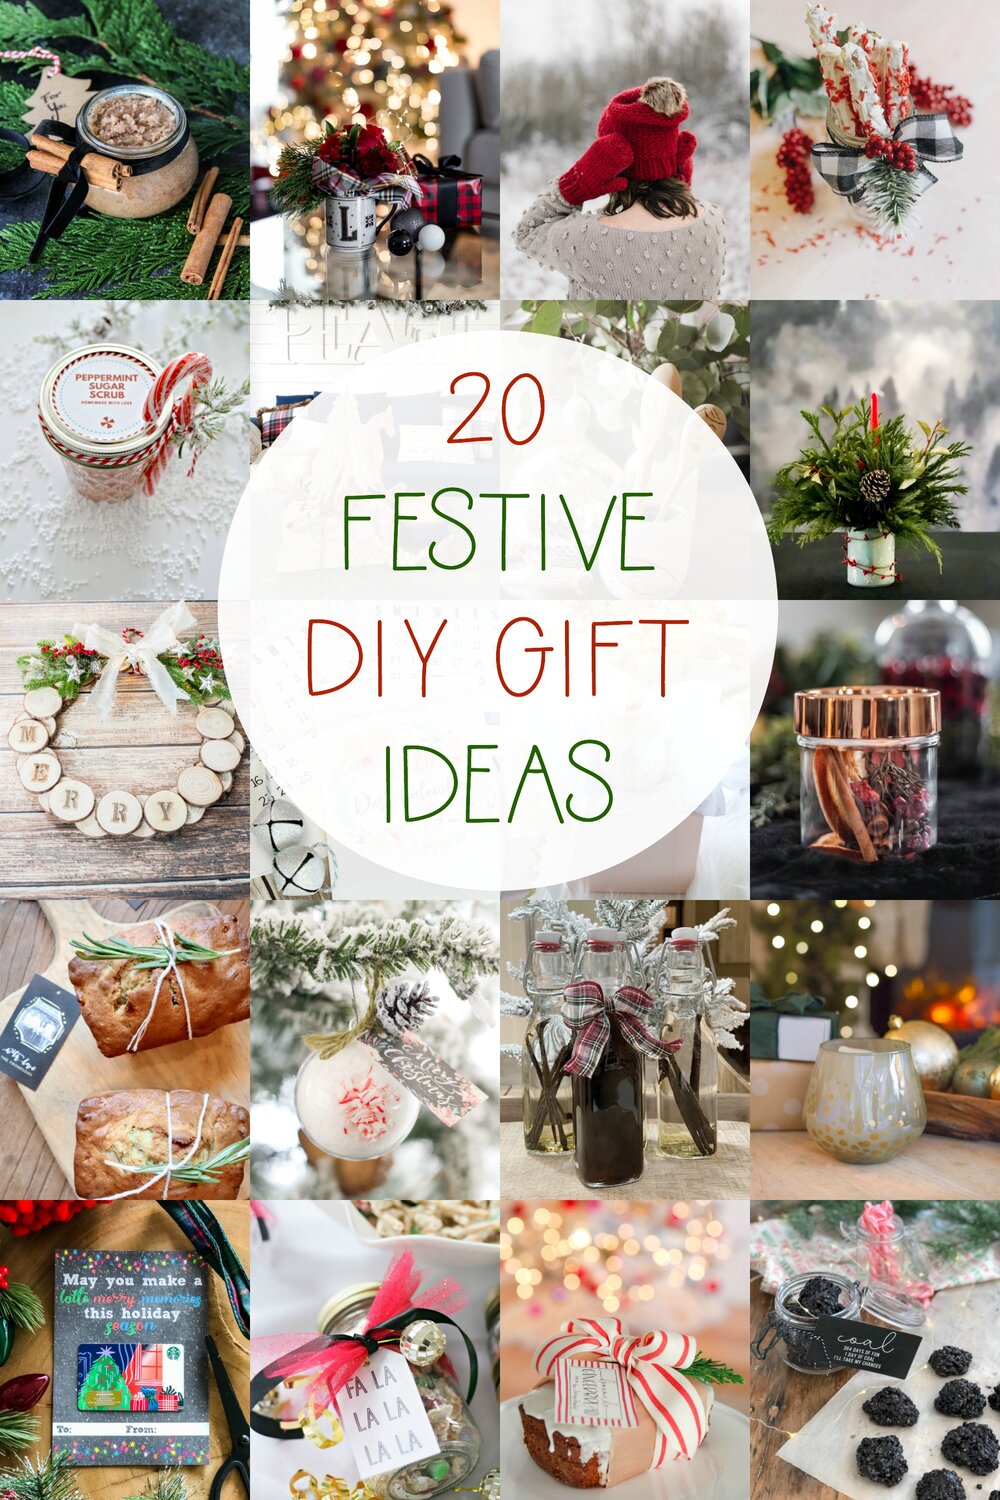 20 festive DIY gift ideas Seasonal Simplicity DIY%20Gift Ideas hop.jpg